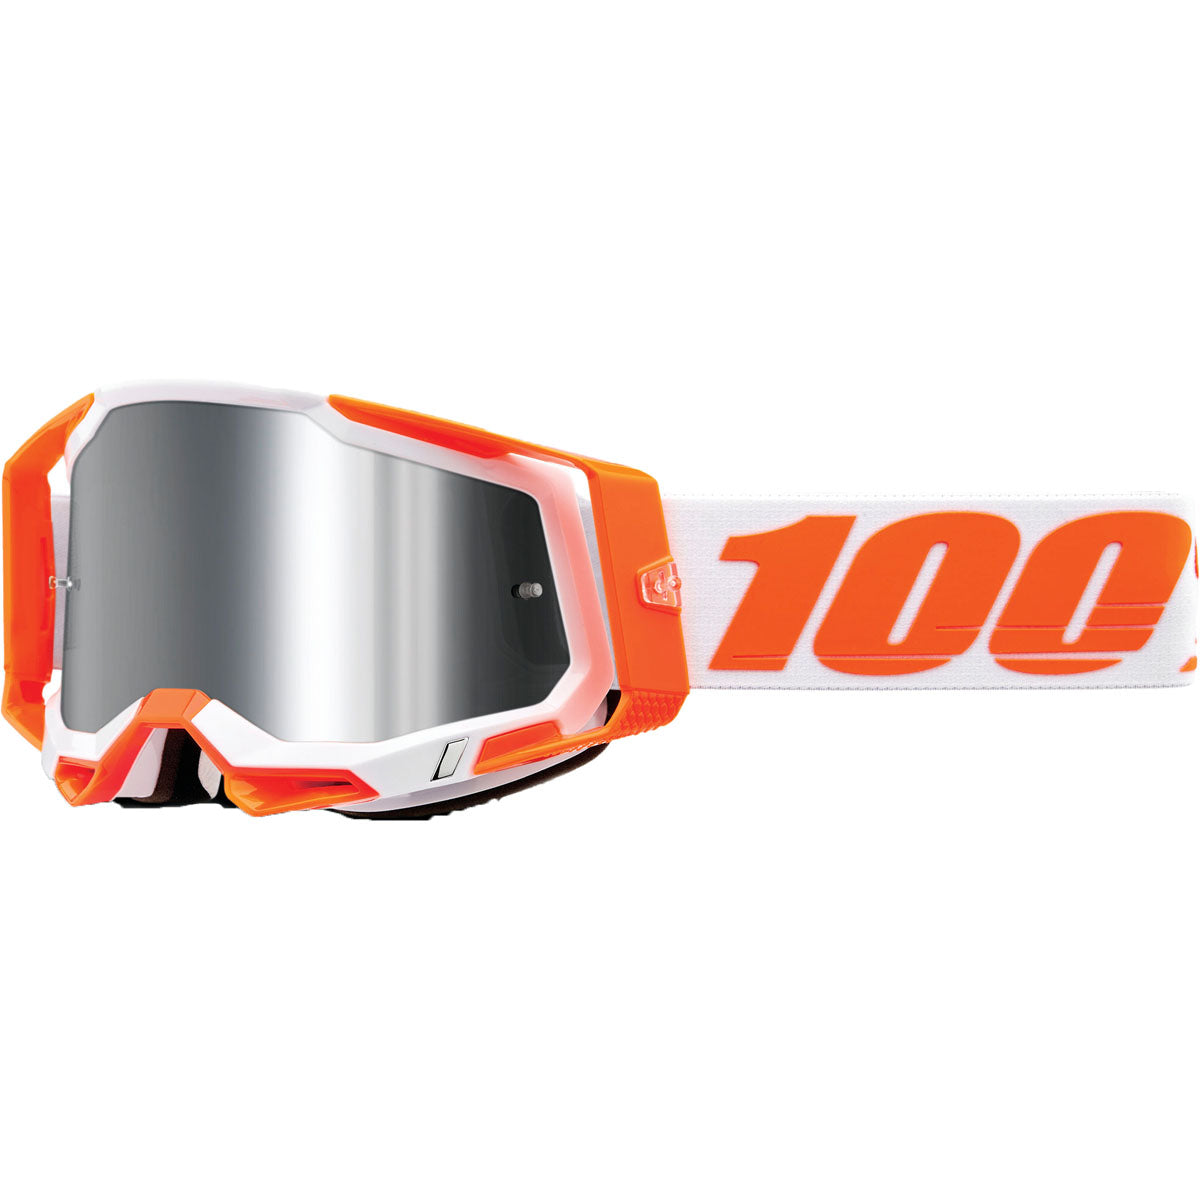 100% Racecraft 2 Goggles Orange / Mirror Silver Flash Lens